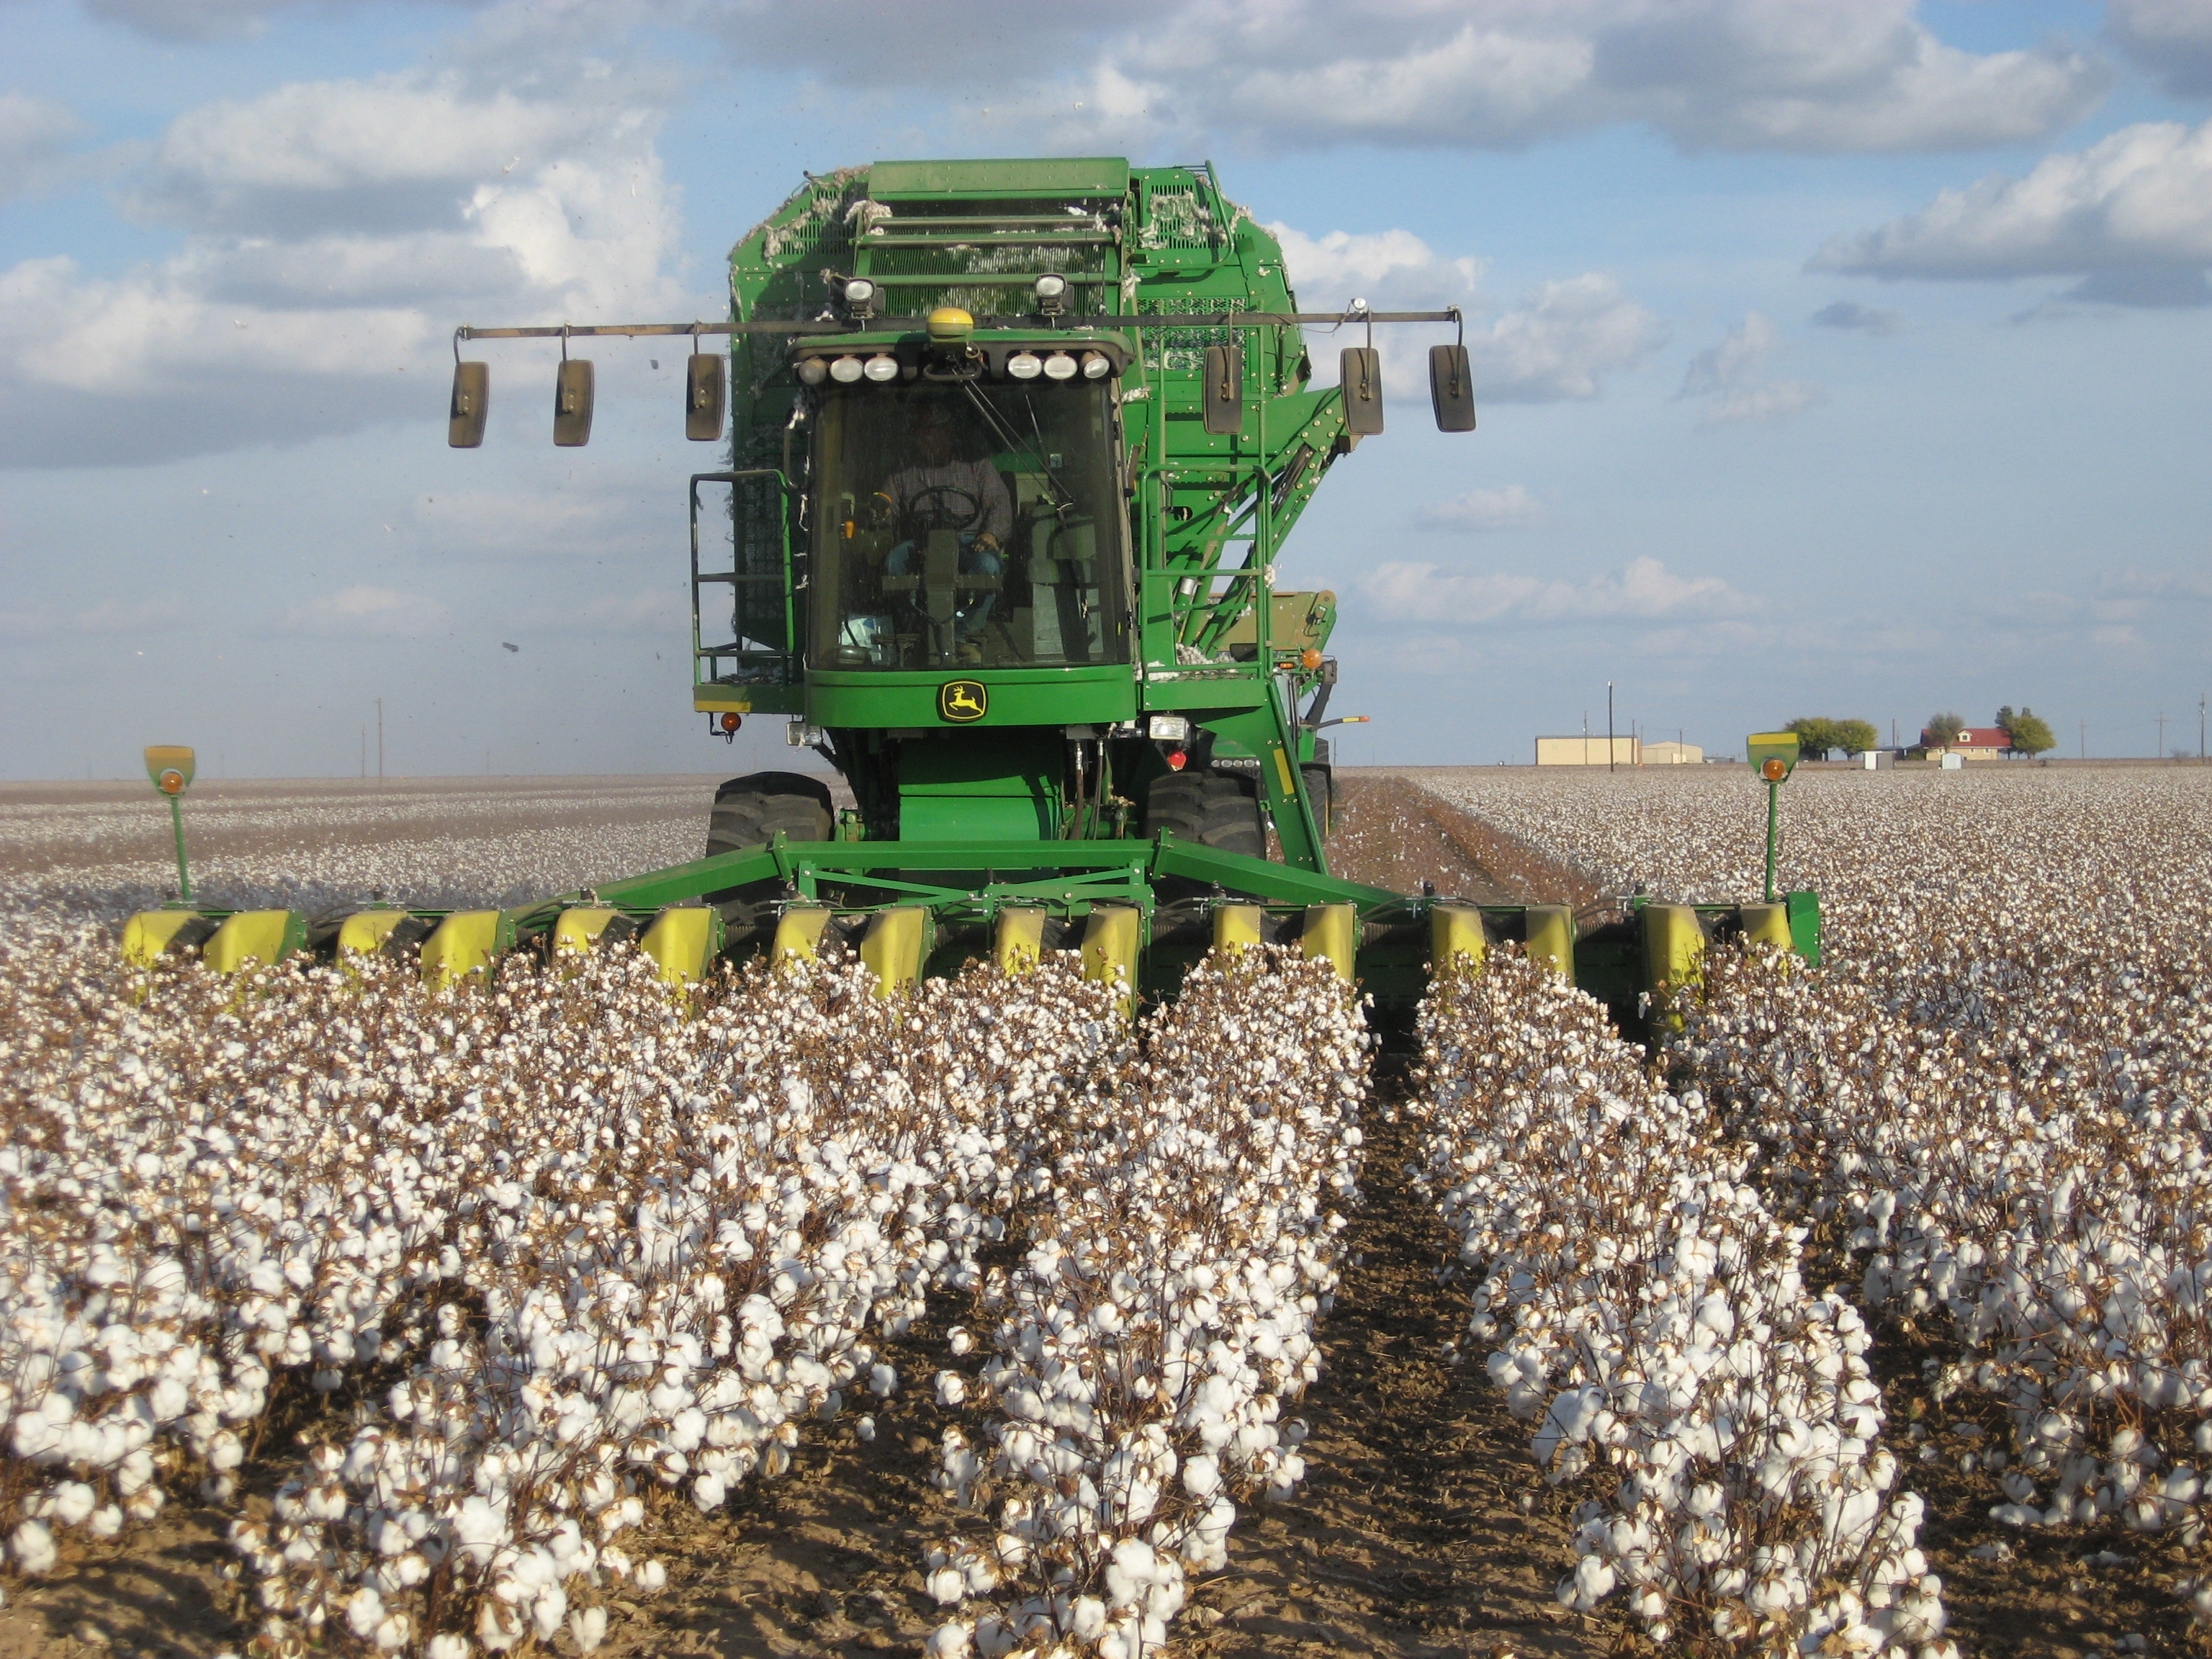 John Deer equipment harvests rows of cotton